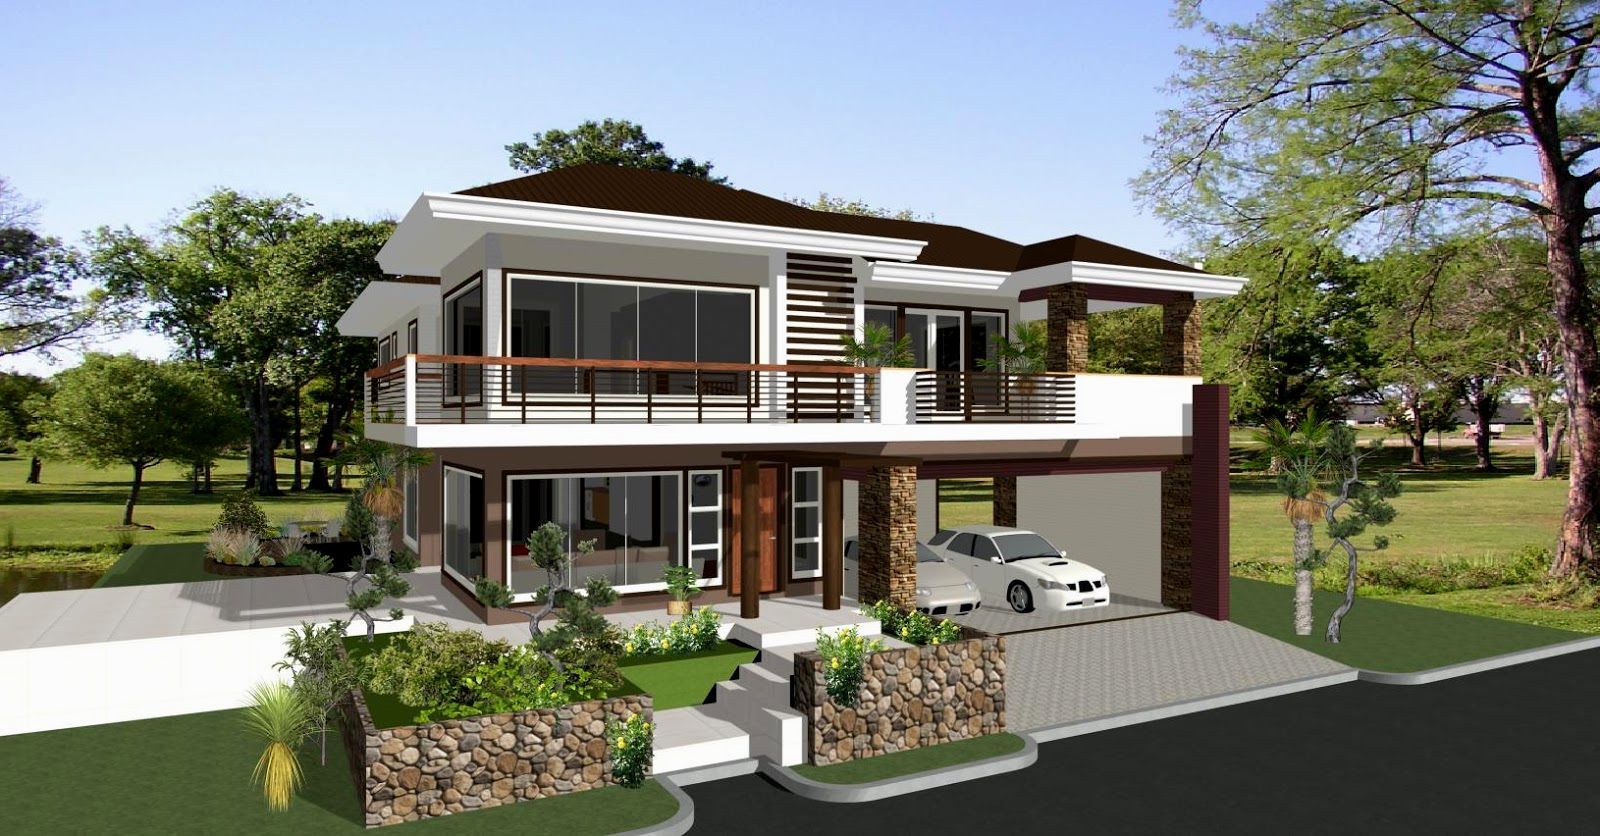 house design plans philippines Home Design 26+ House Design Plans Philippines Pics